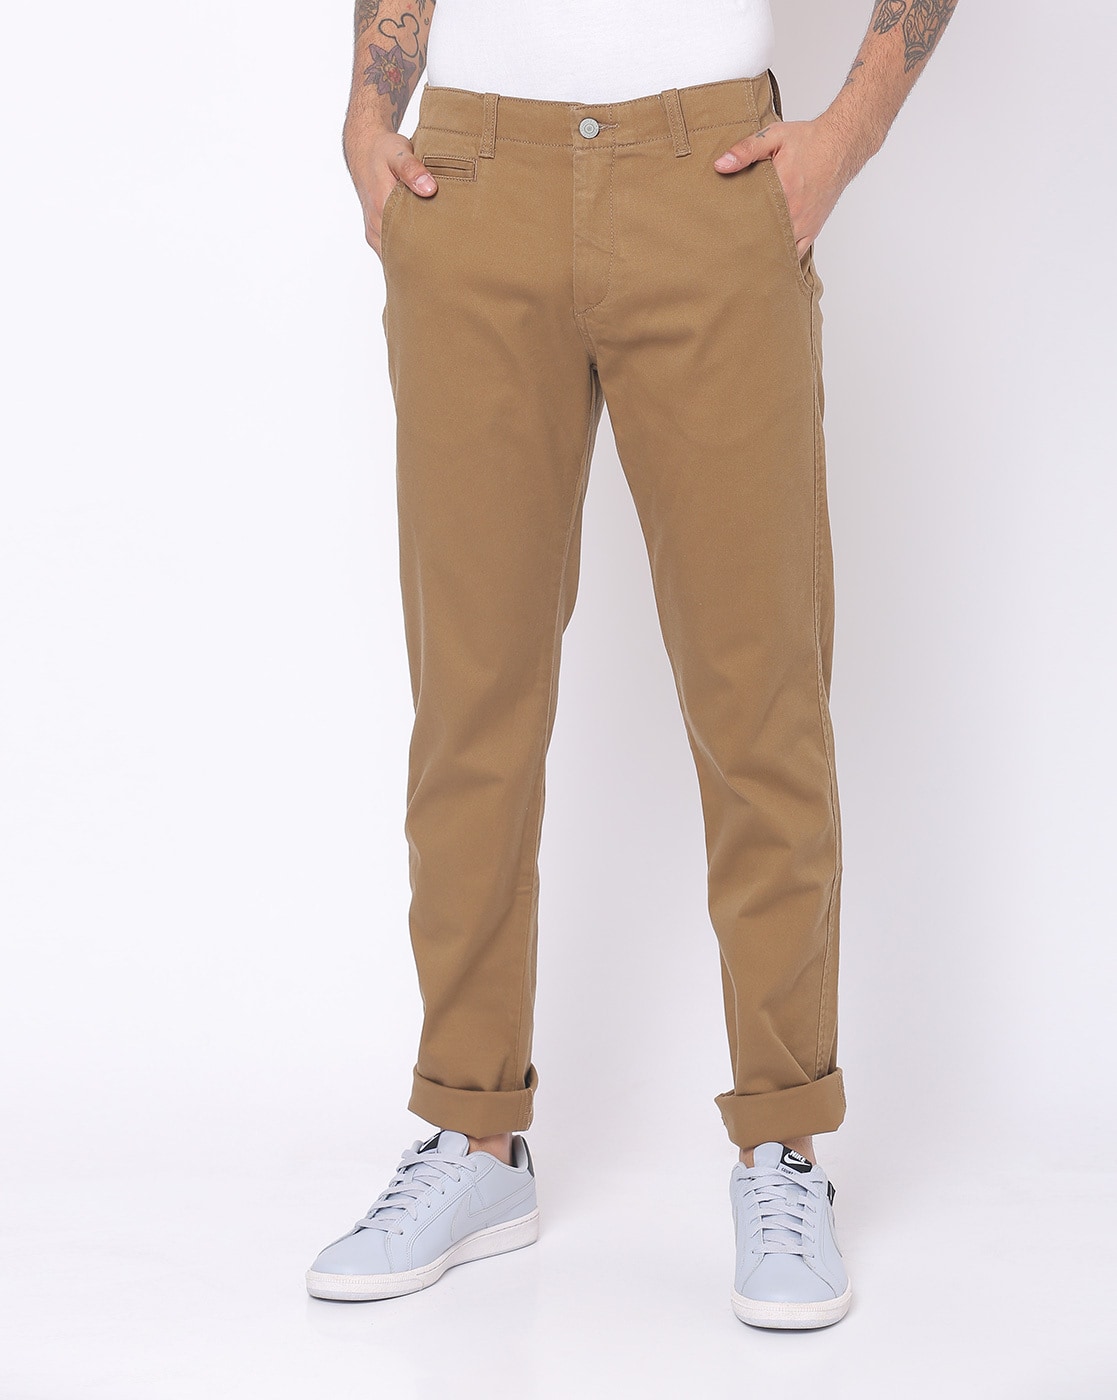 Buy Khaki Trousers & Pants for Men by LEVIS Online 